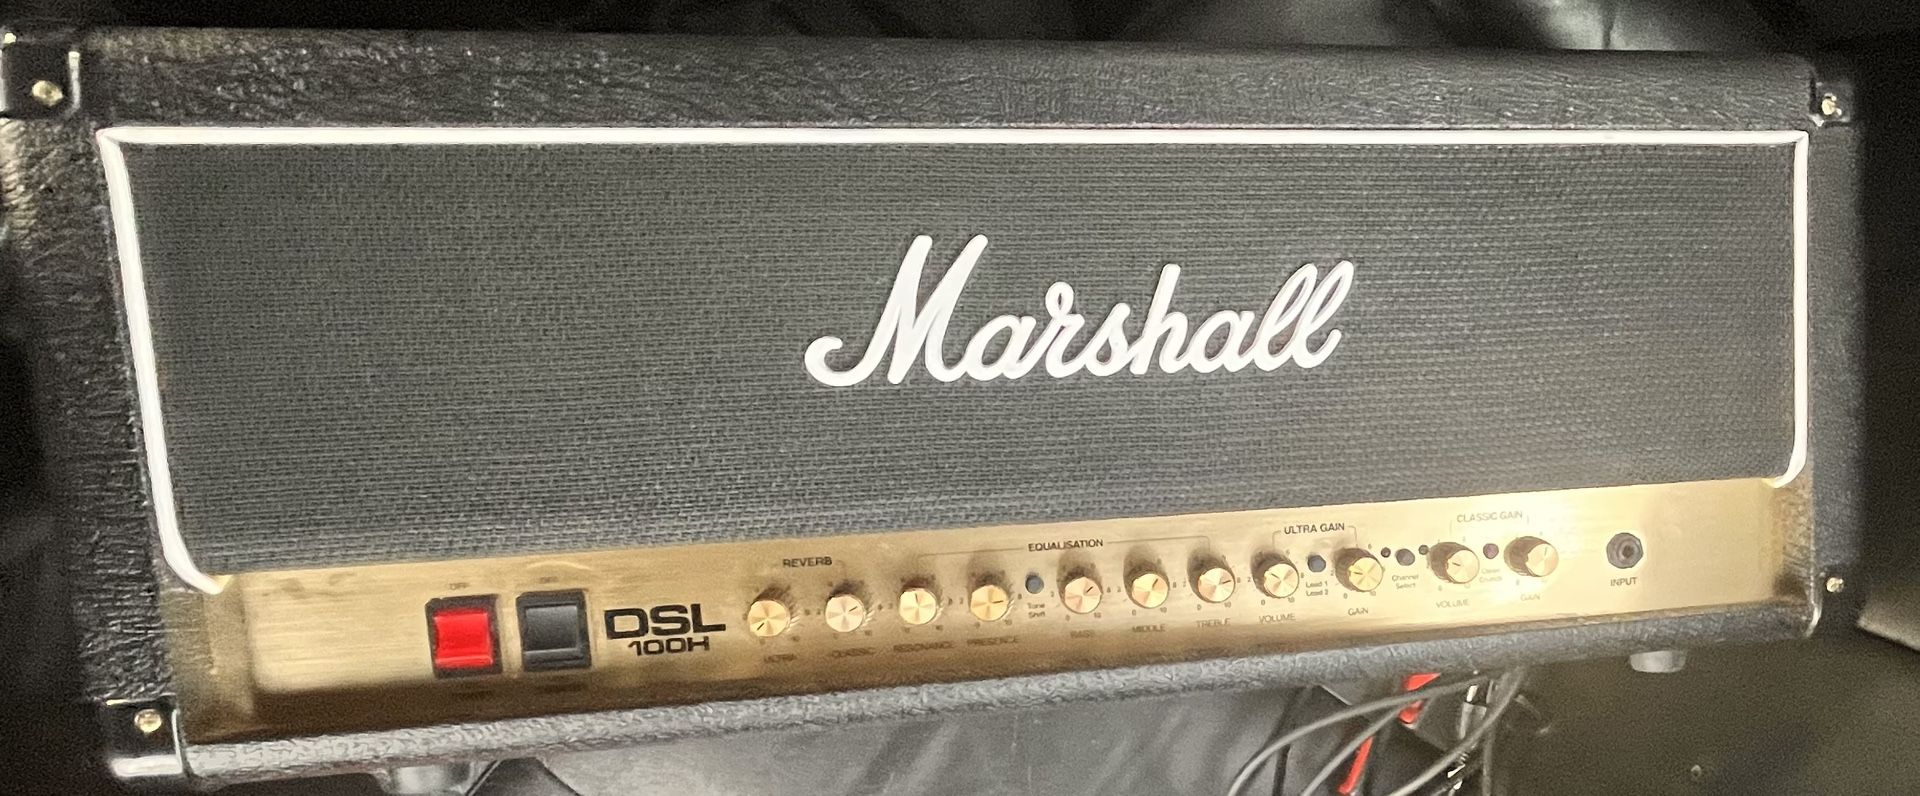 Marshall DSL 100 Amp Head